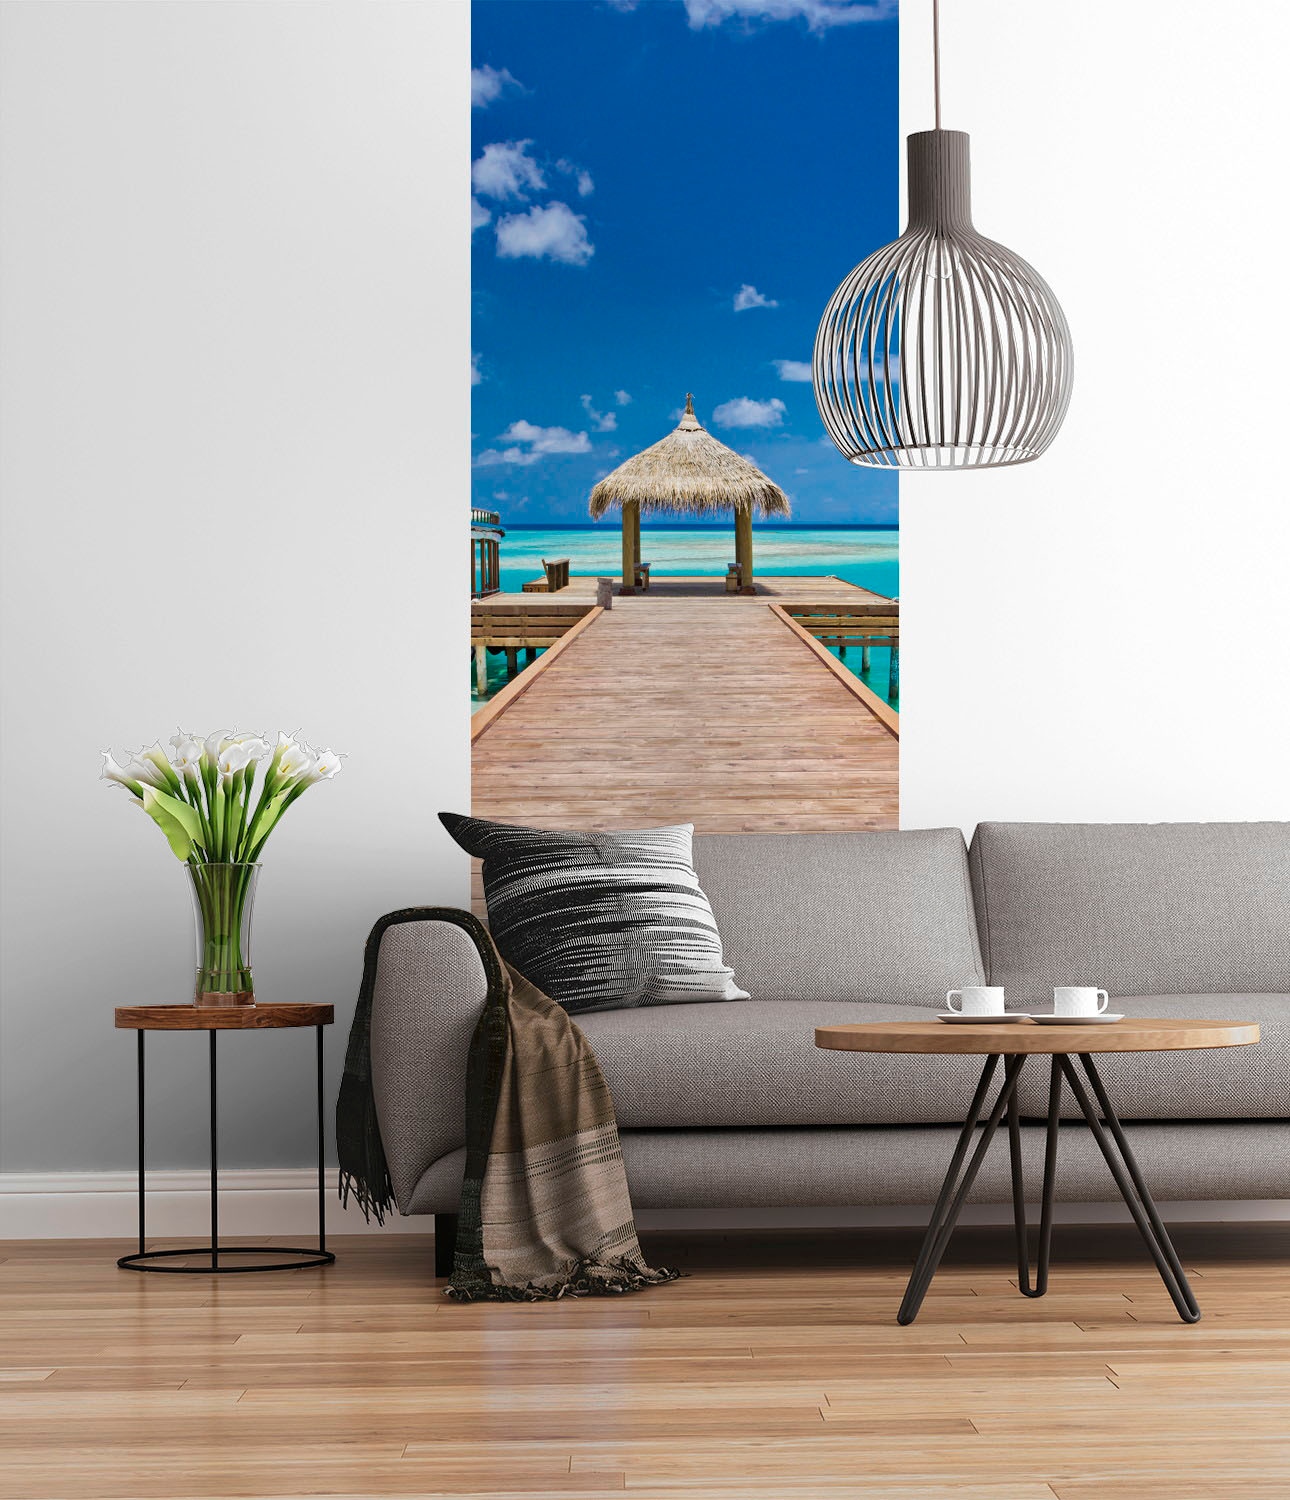 Fototapete »Vlies Fototapete - Beach Resort - Größe 100 x 280 cm«, bedruckt